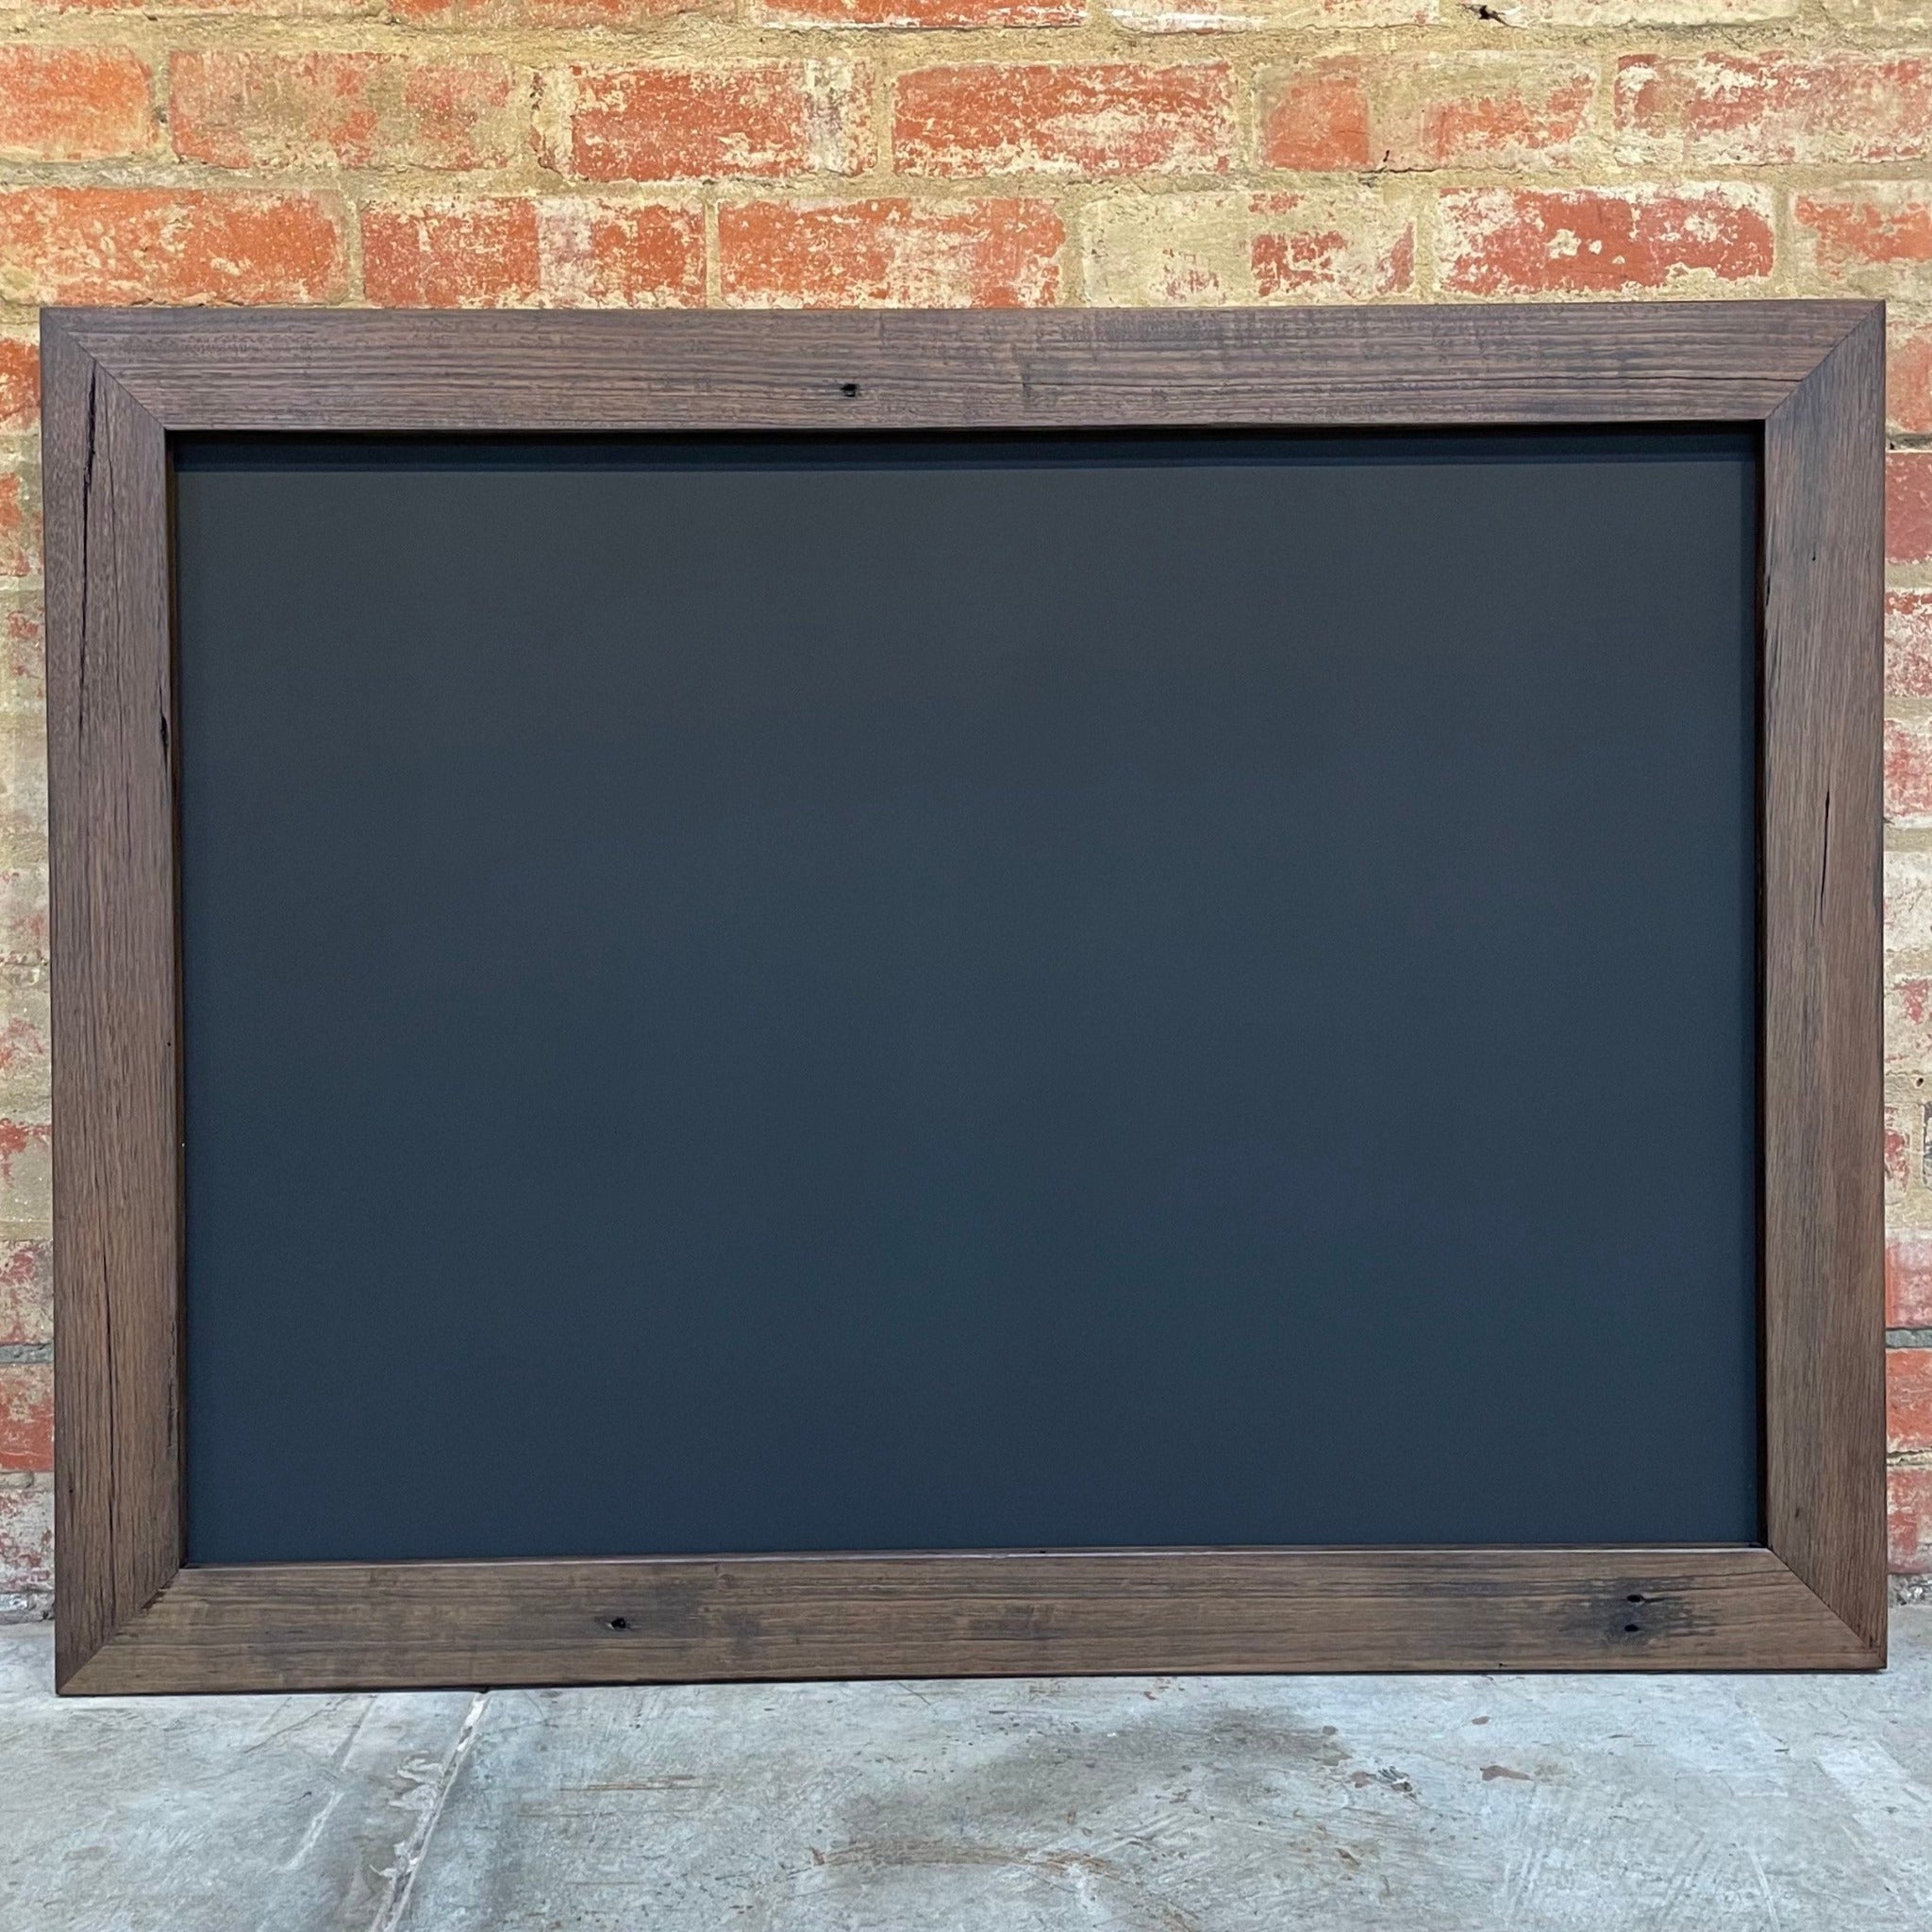 Darkwood frame around Chalkboard in Australia